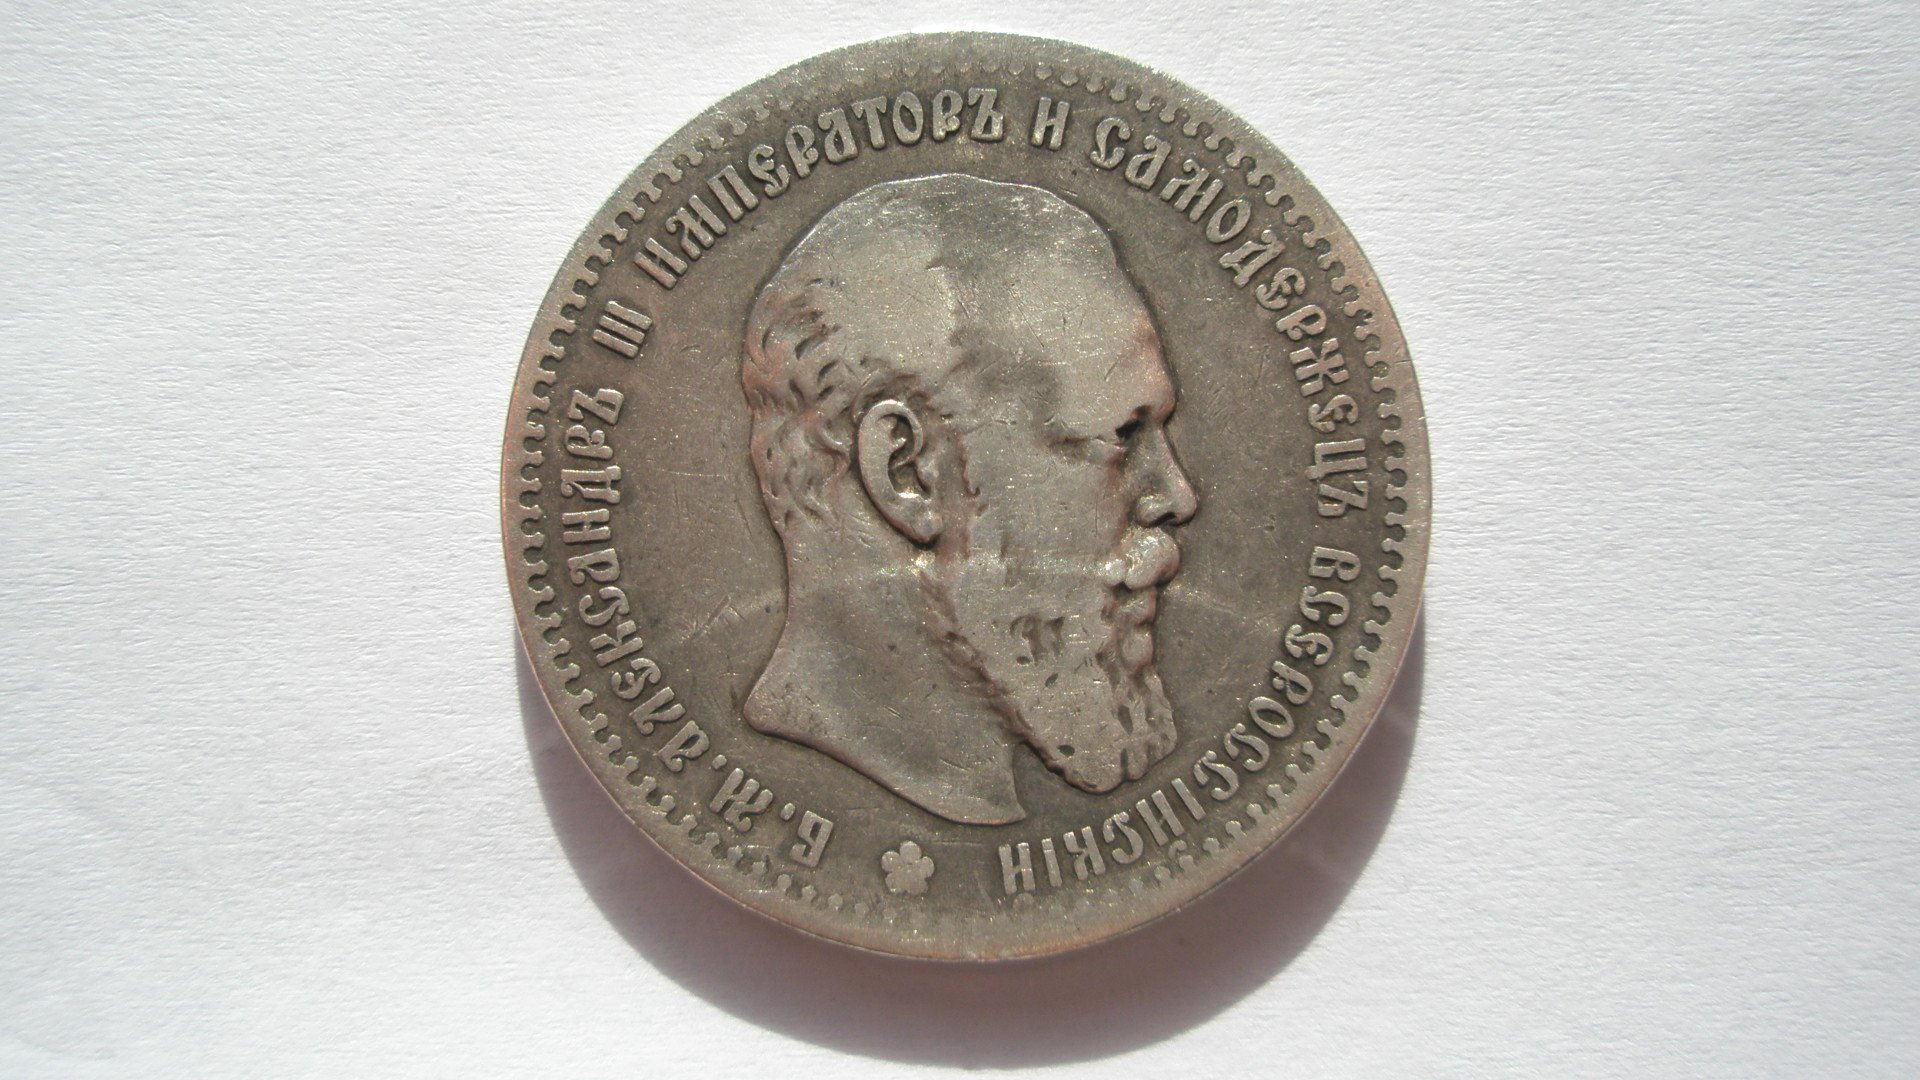 Rusko 1 rubeľ 1890 vzácny - Európa numizmatika